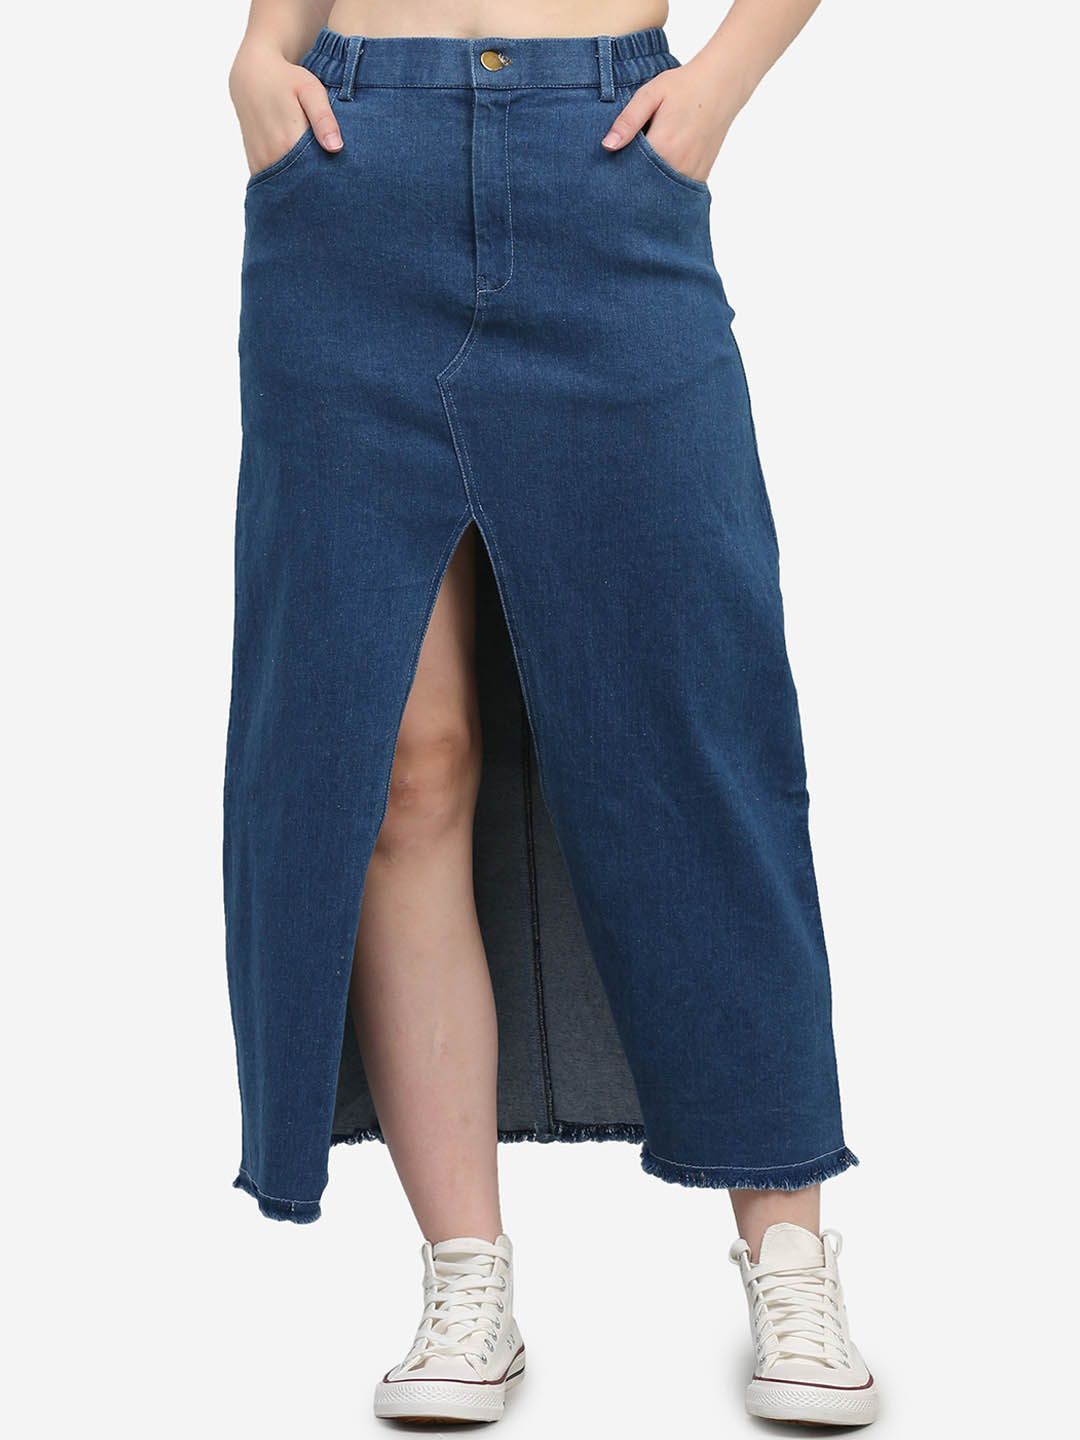 SUMAVI-FASHION Denim Front Slit Maxi Skirt Price in India